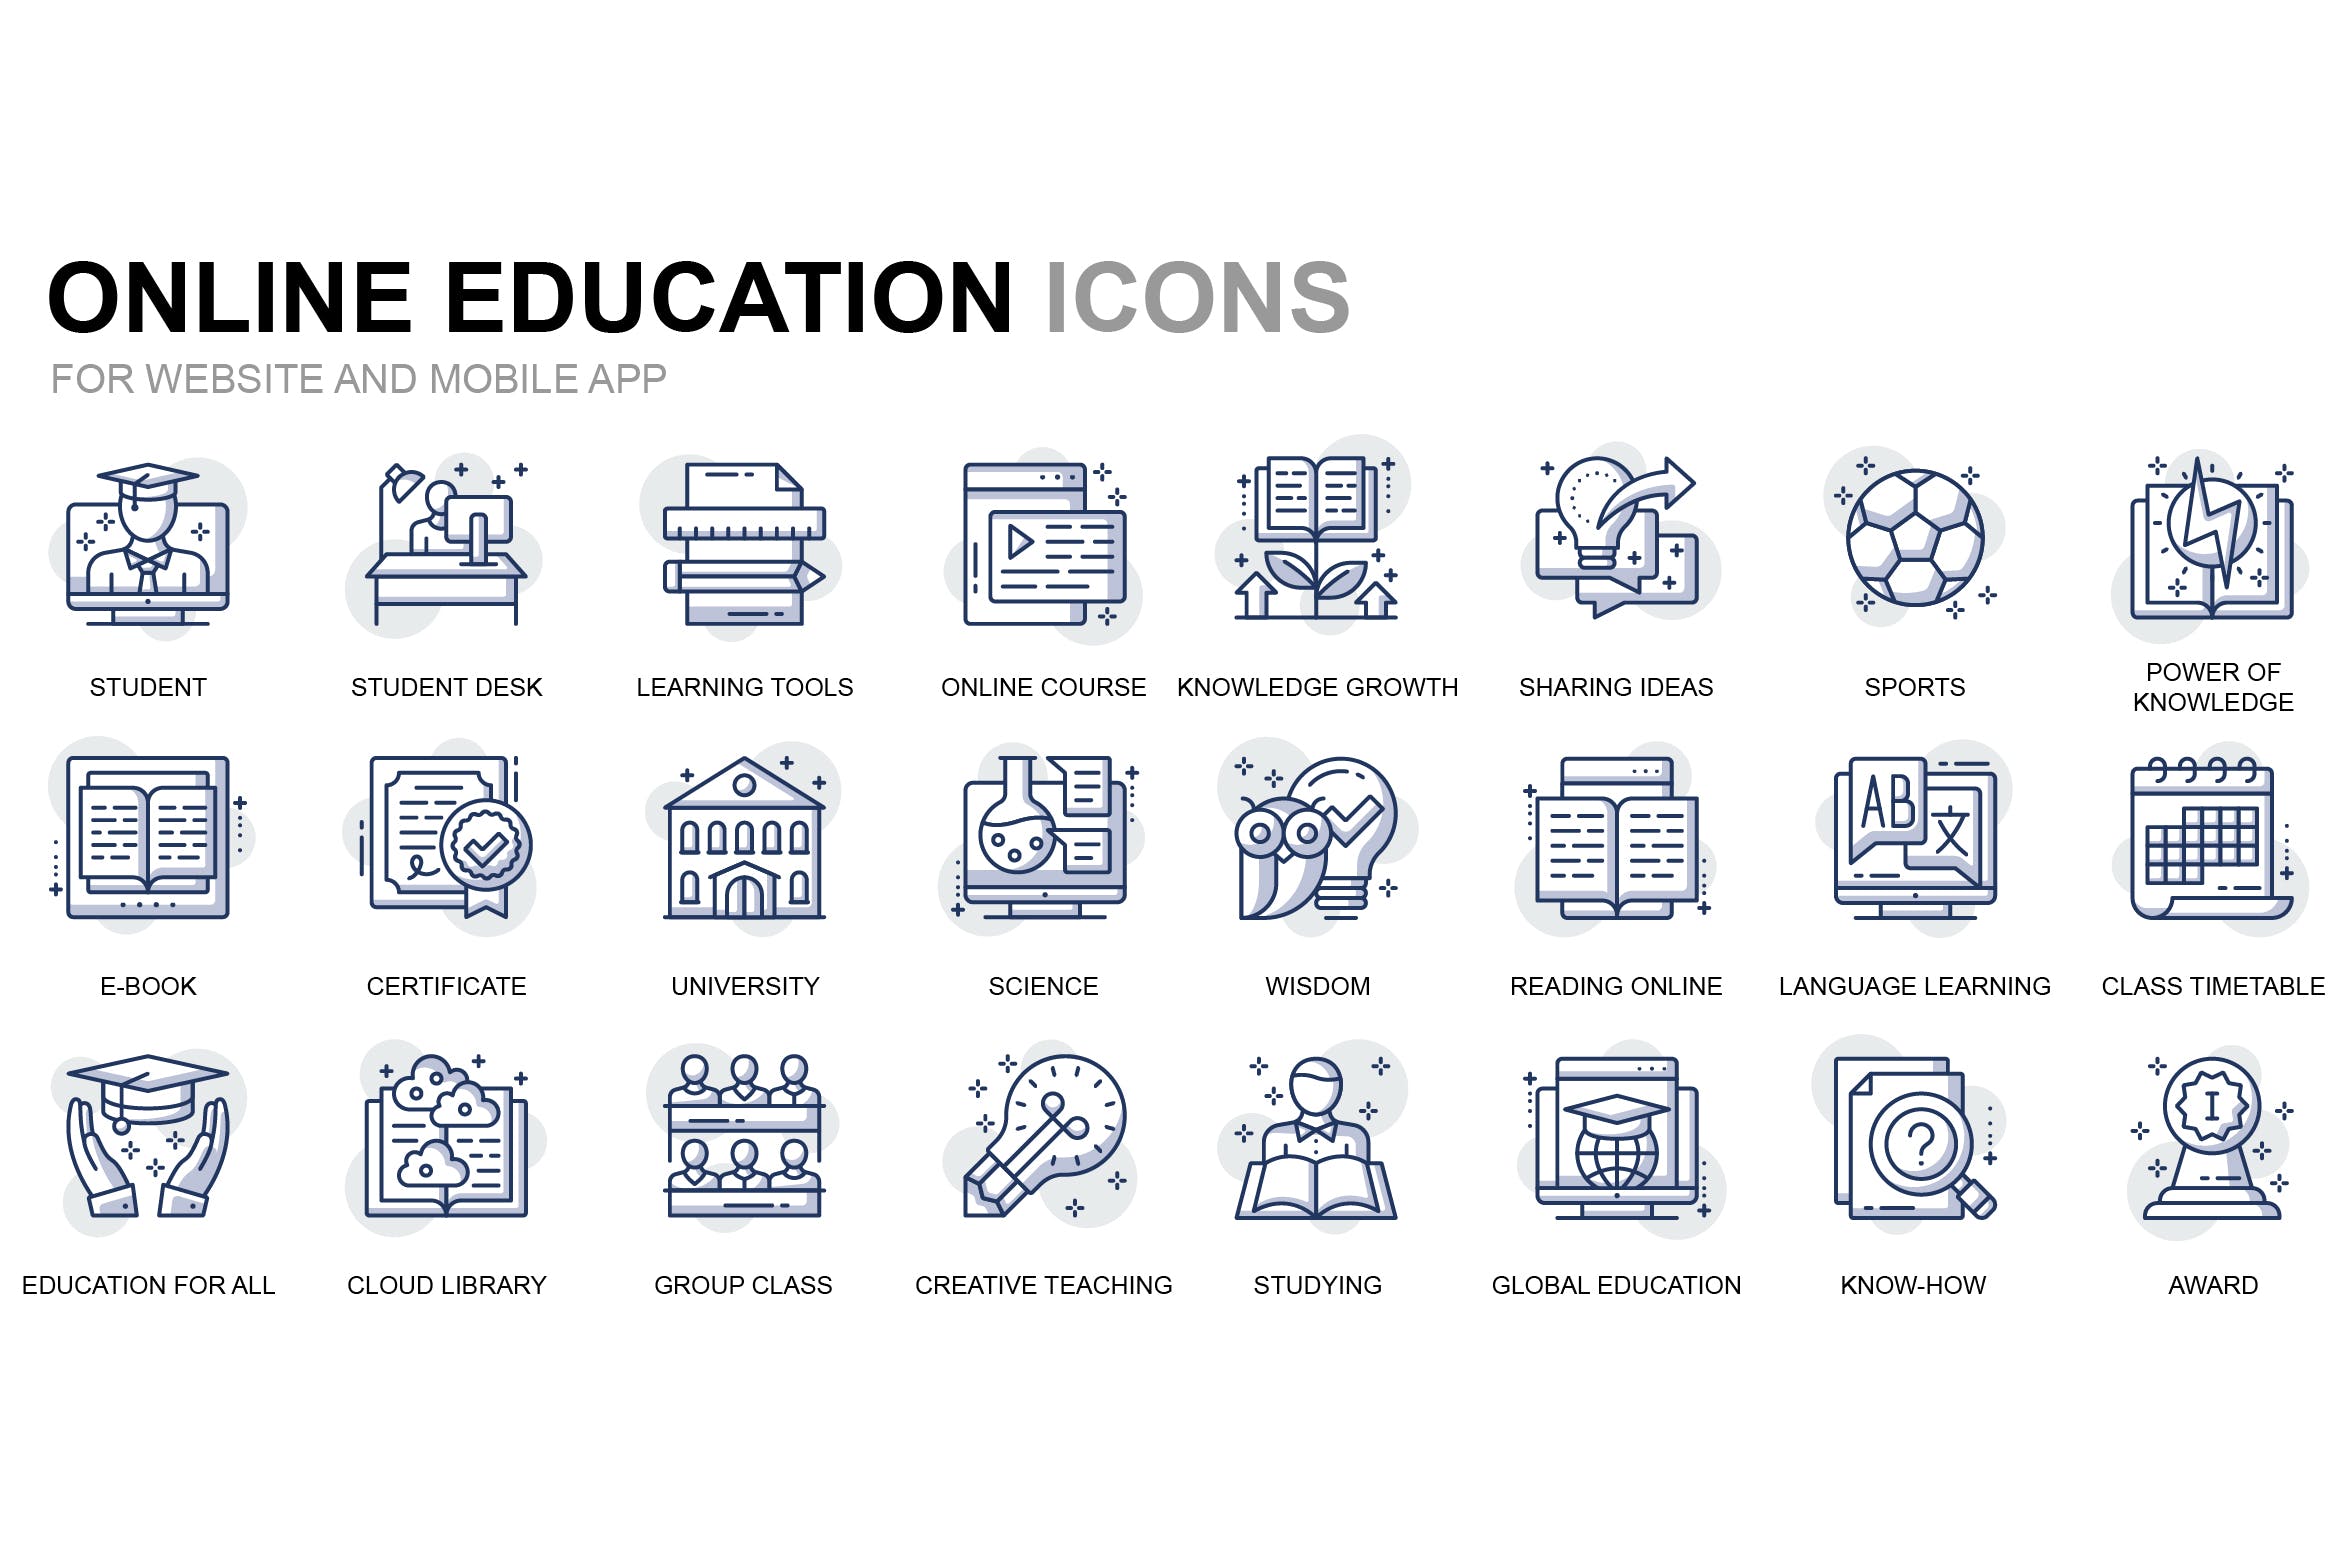 在线教育主题细线图标素材 Online Education Thin Line Icons插图